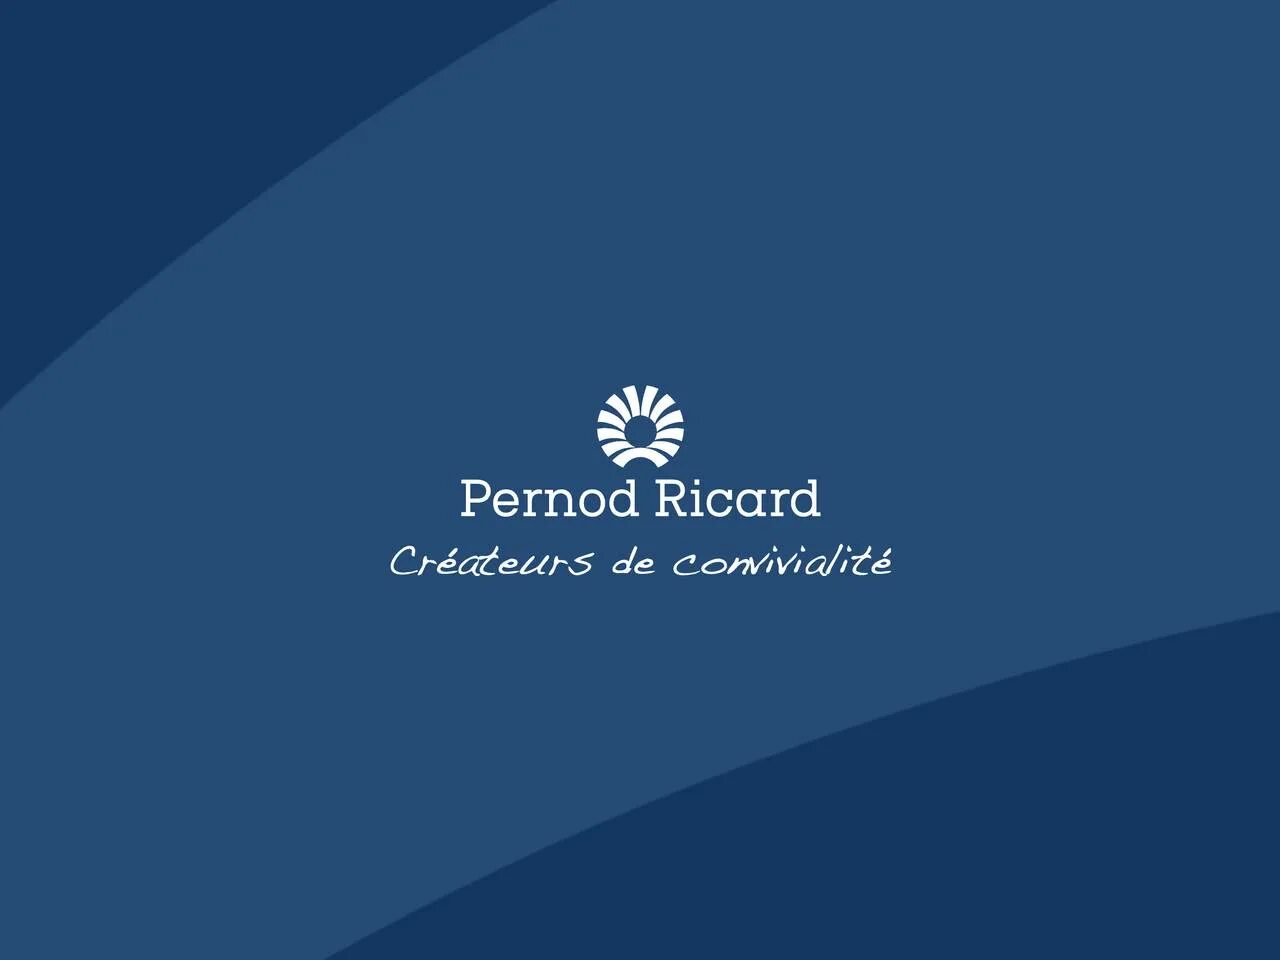 Перно Рикар лого. Pernod Ricard продукция. Логотип перно Рикар Русь.